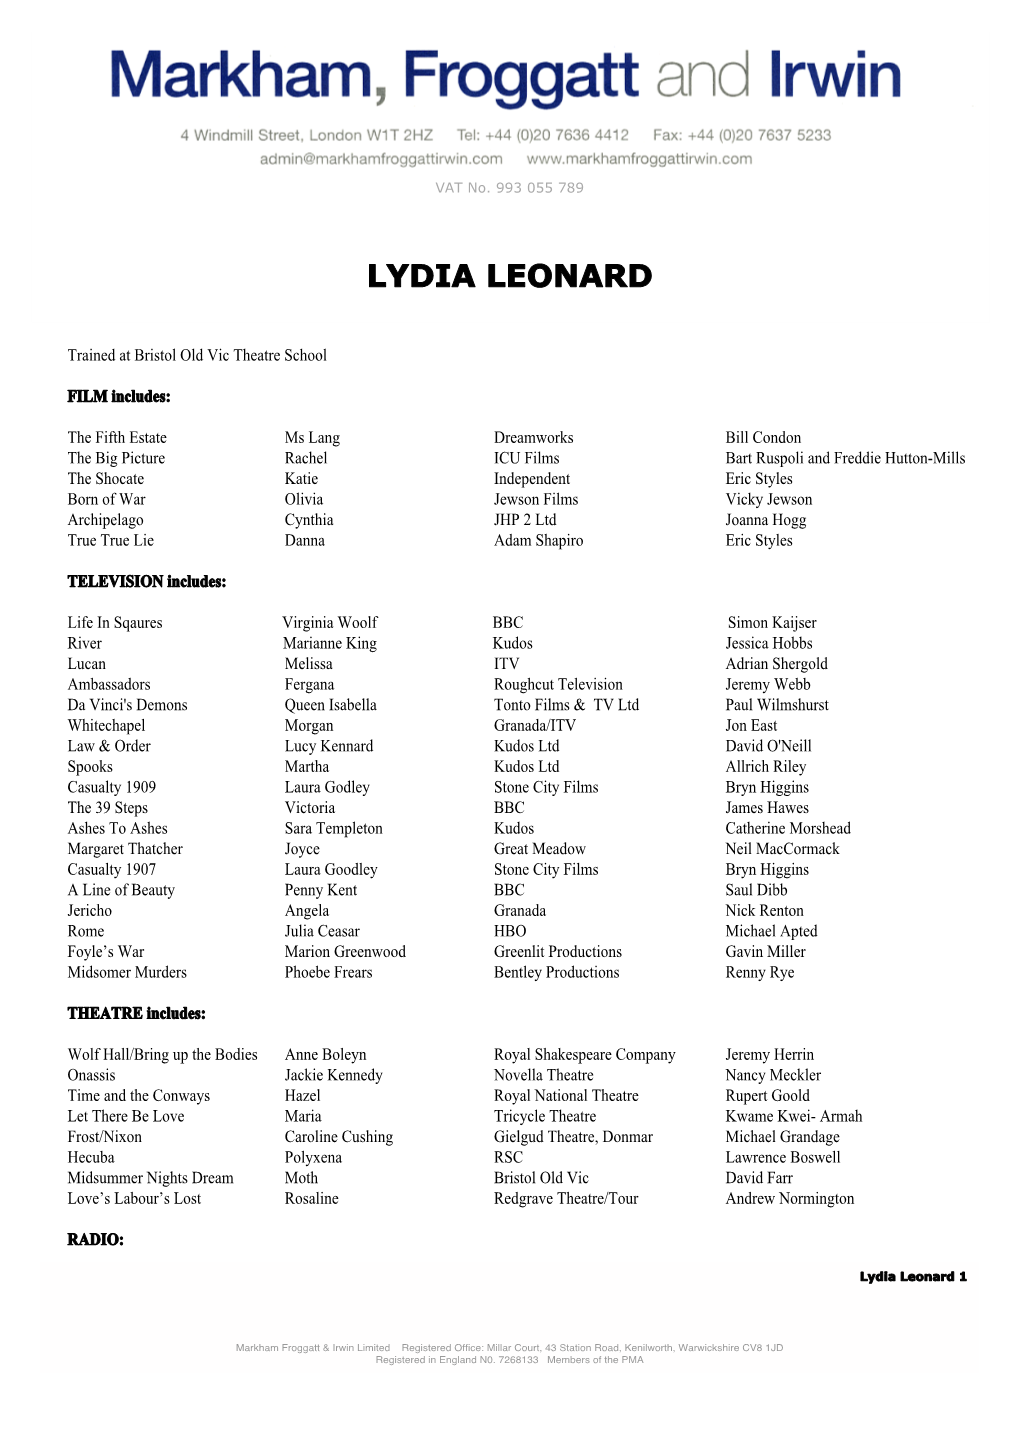 Lydia Leonard